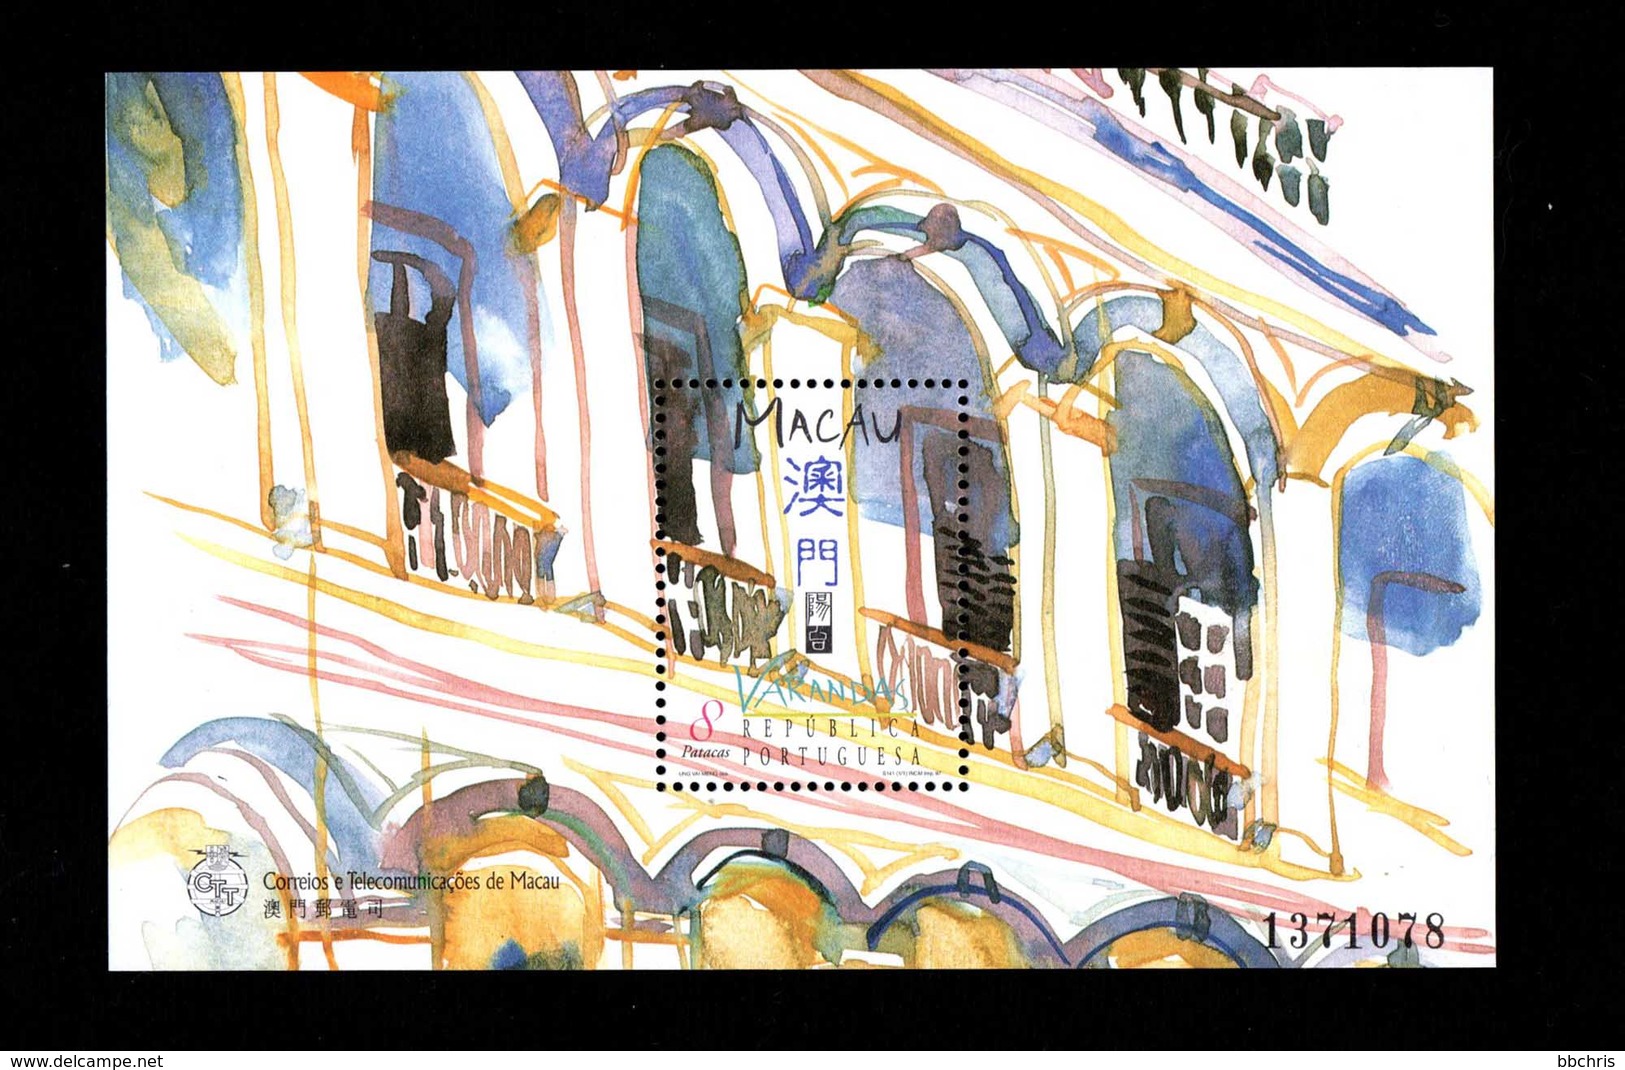 Macau Macao 1997 Varandas Balconies Painting Souvenir Sheet MNH Mint - Libretti